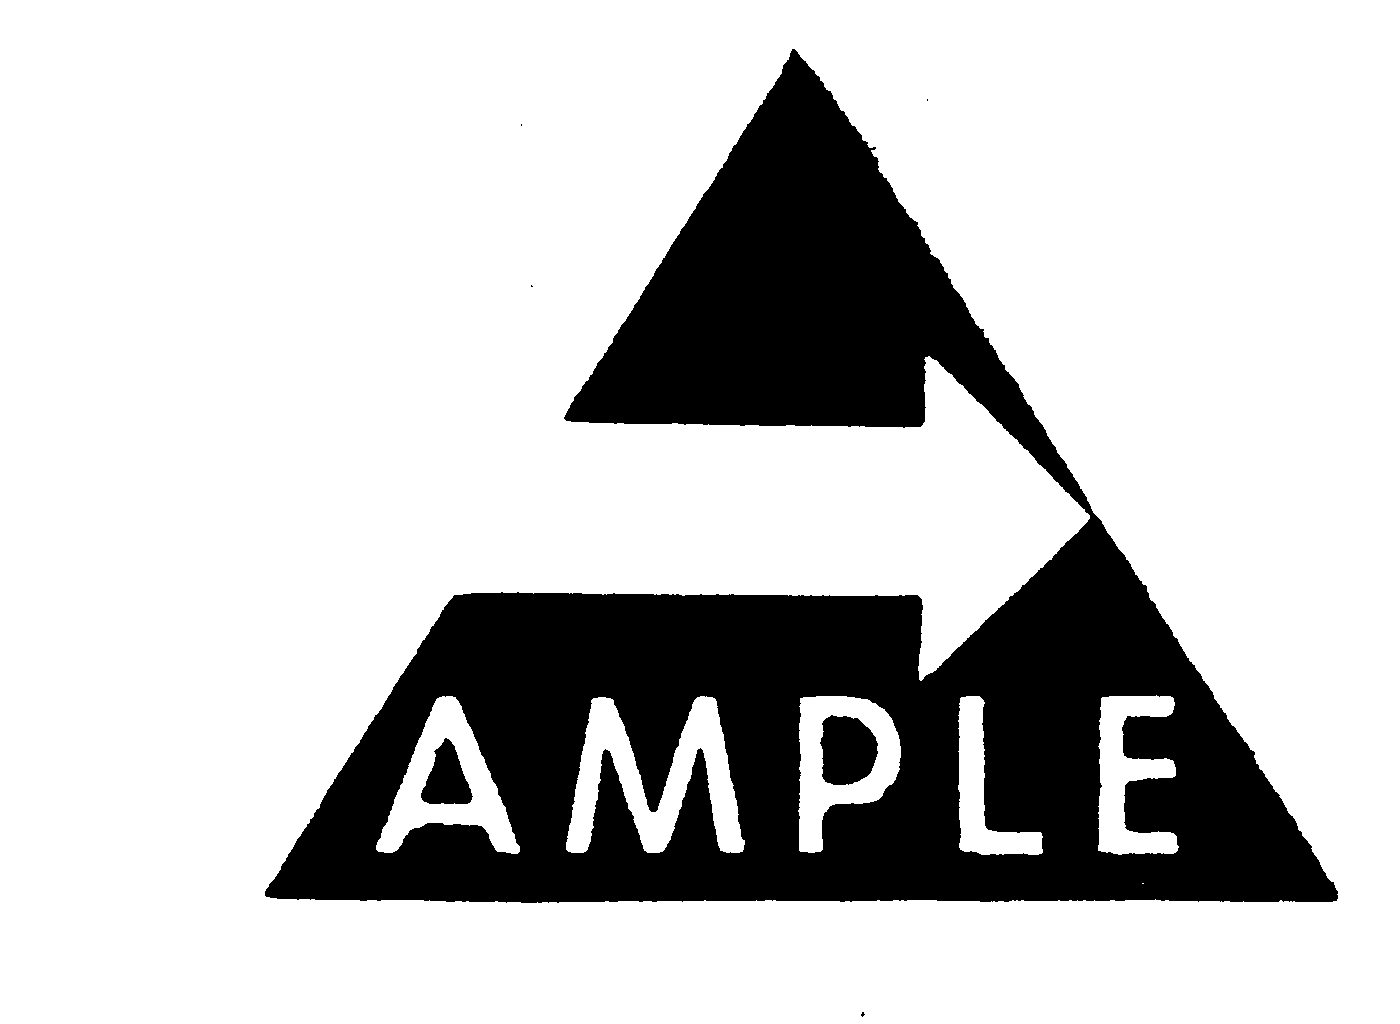 AMPLE